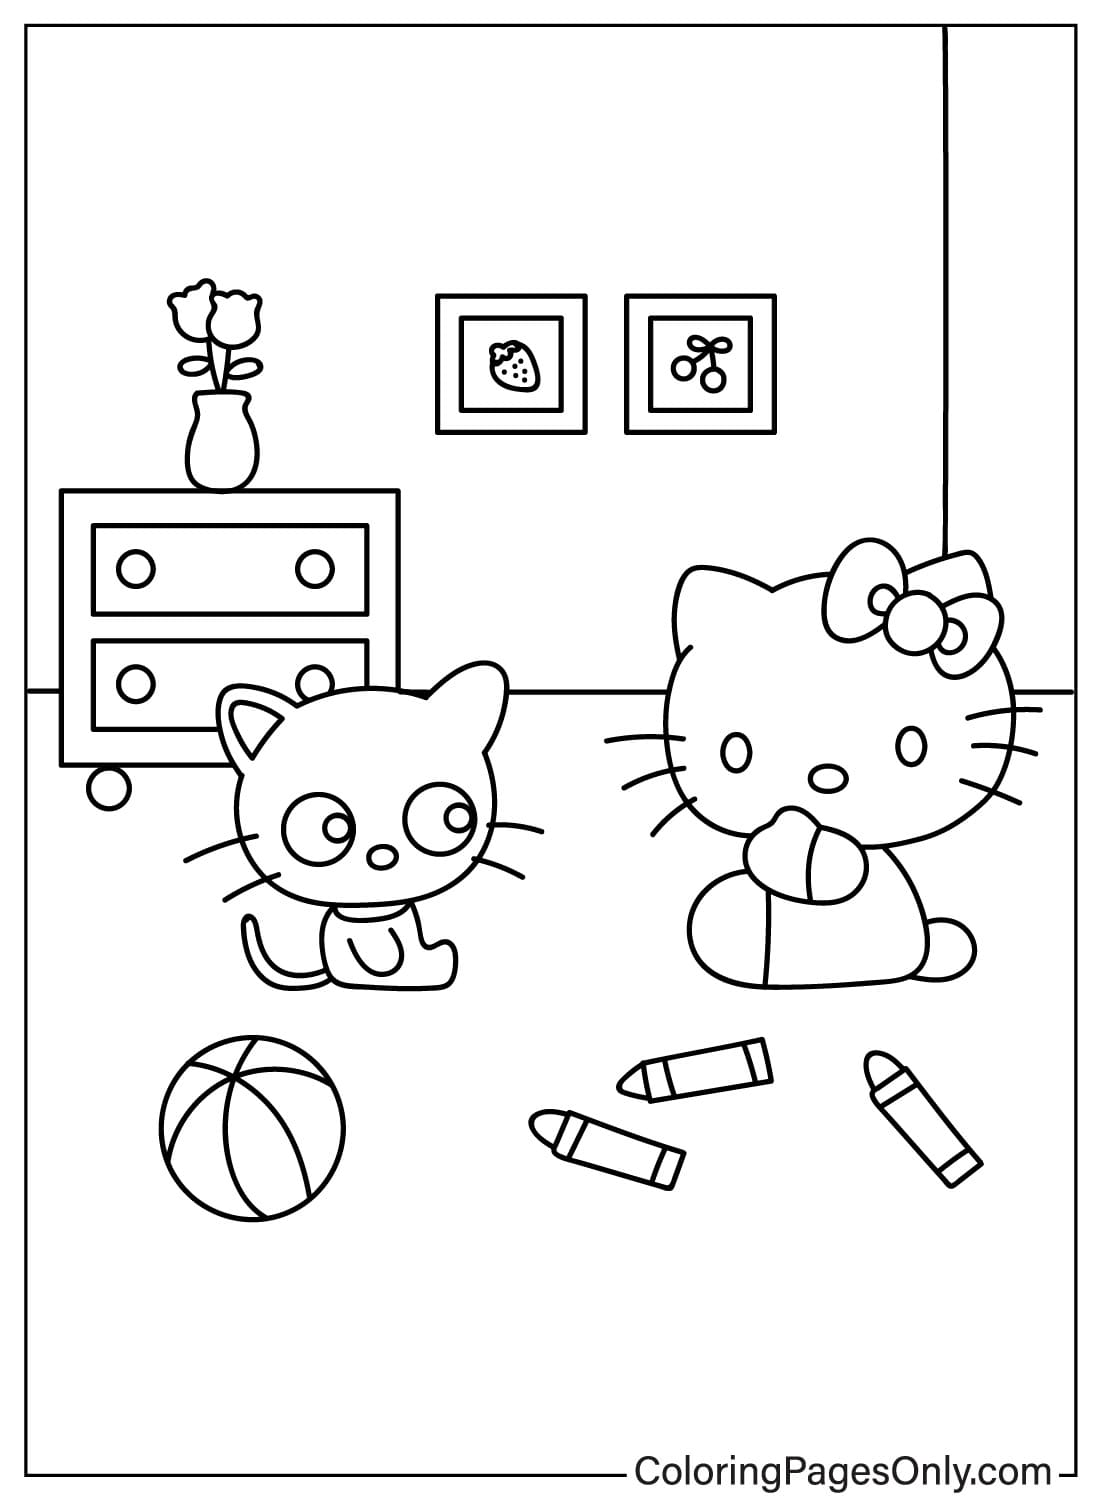 Chococat, Página para colorear de Hello Kitty gratis de Hello Kitty